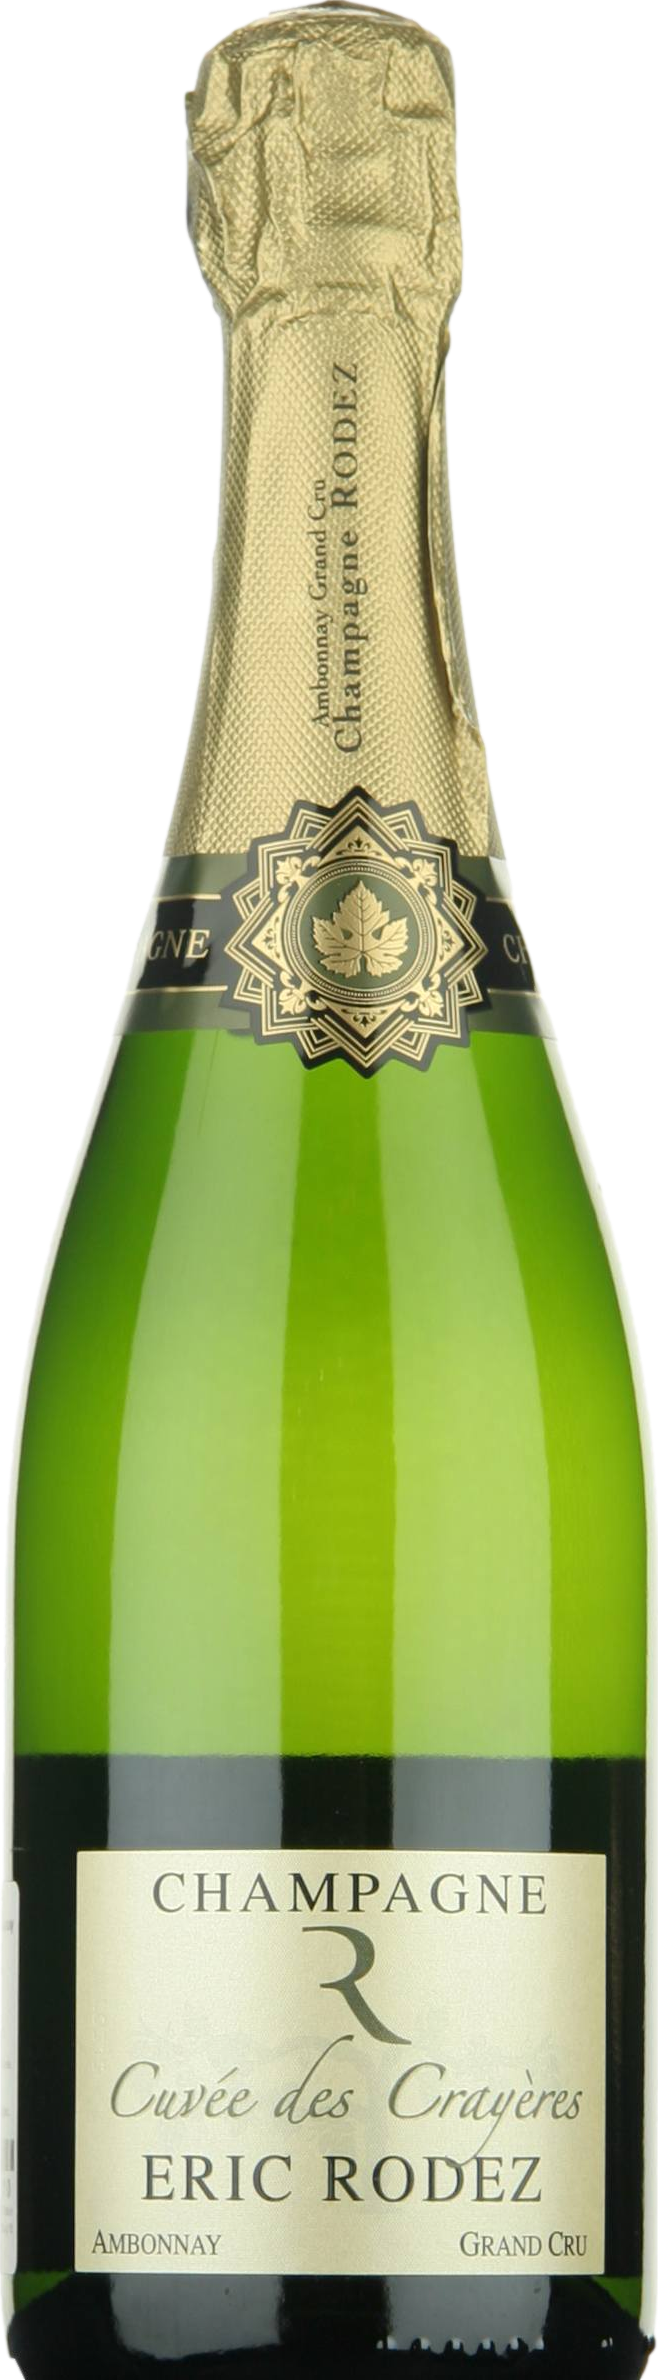 Champagne Eric Rodez Cuvee des Crayeres Ambonnay Grand Cru